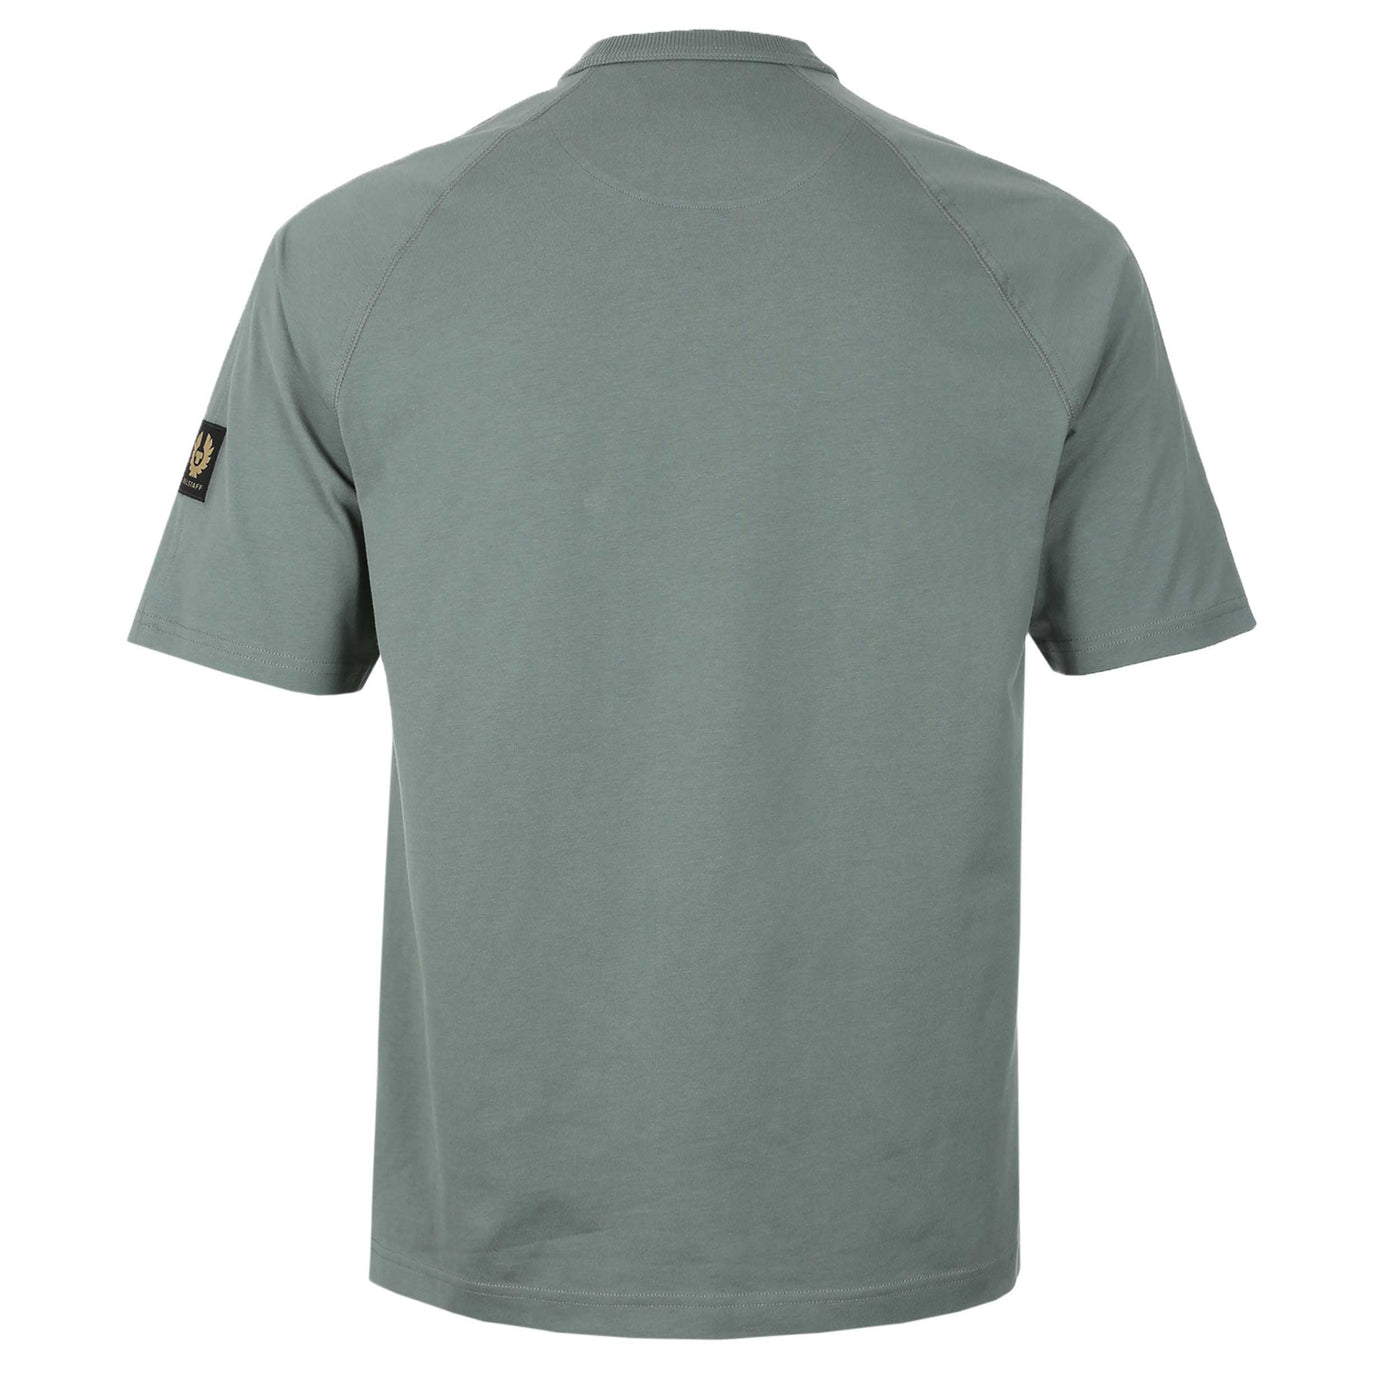 Belstaff Castmaster T-Shirt in Mineral Green Back